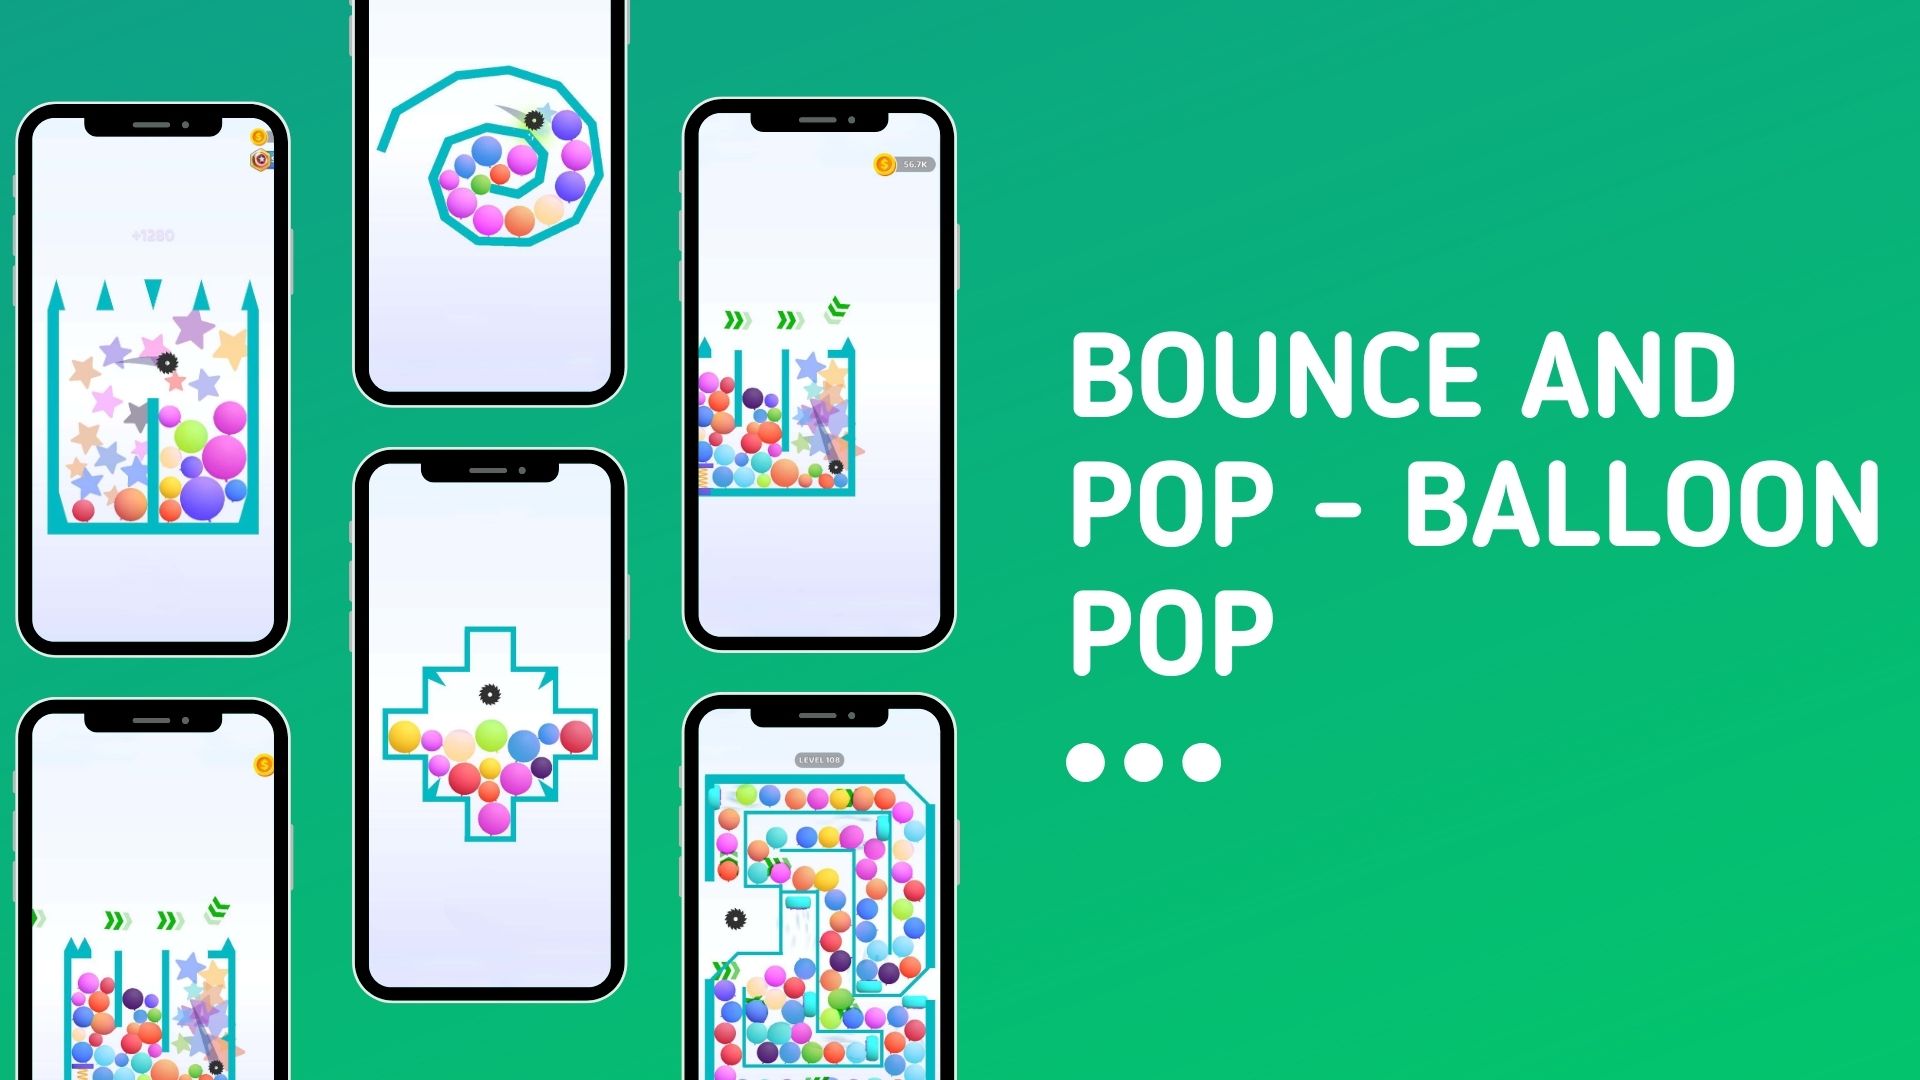 Bounce and pop – Balloon pop